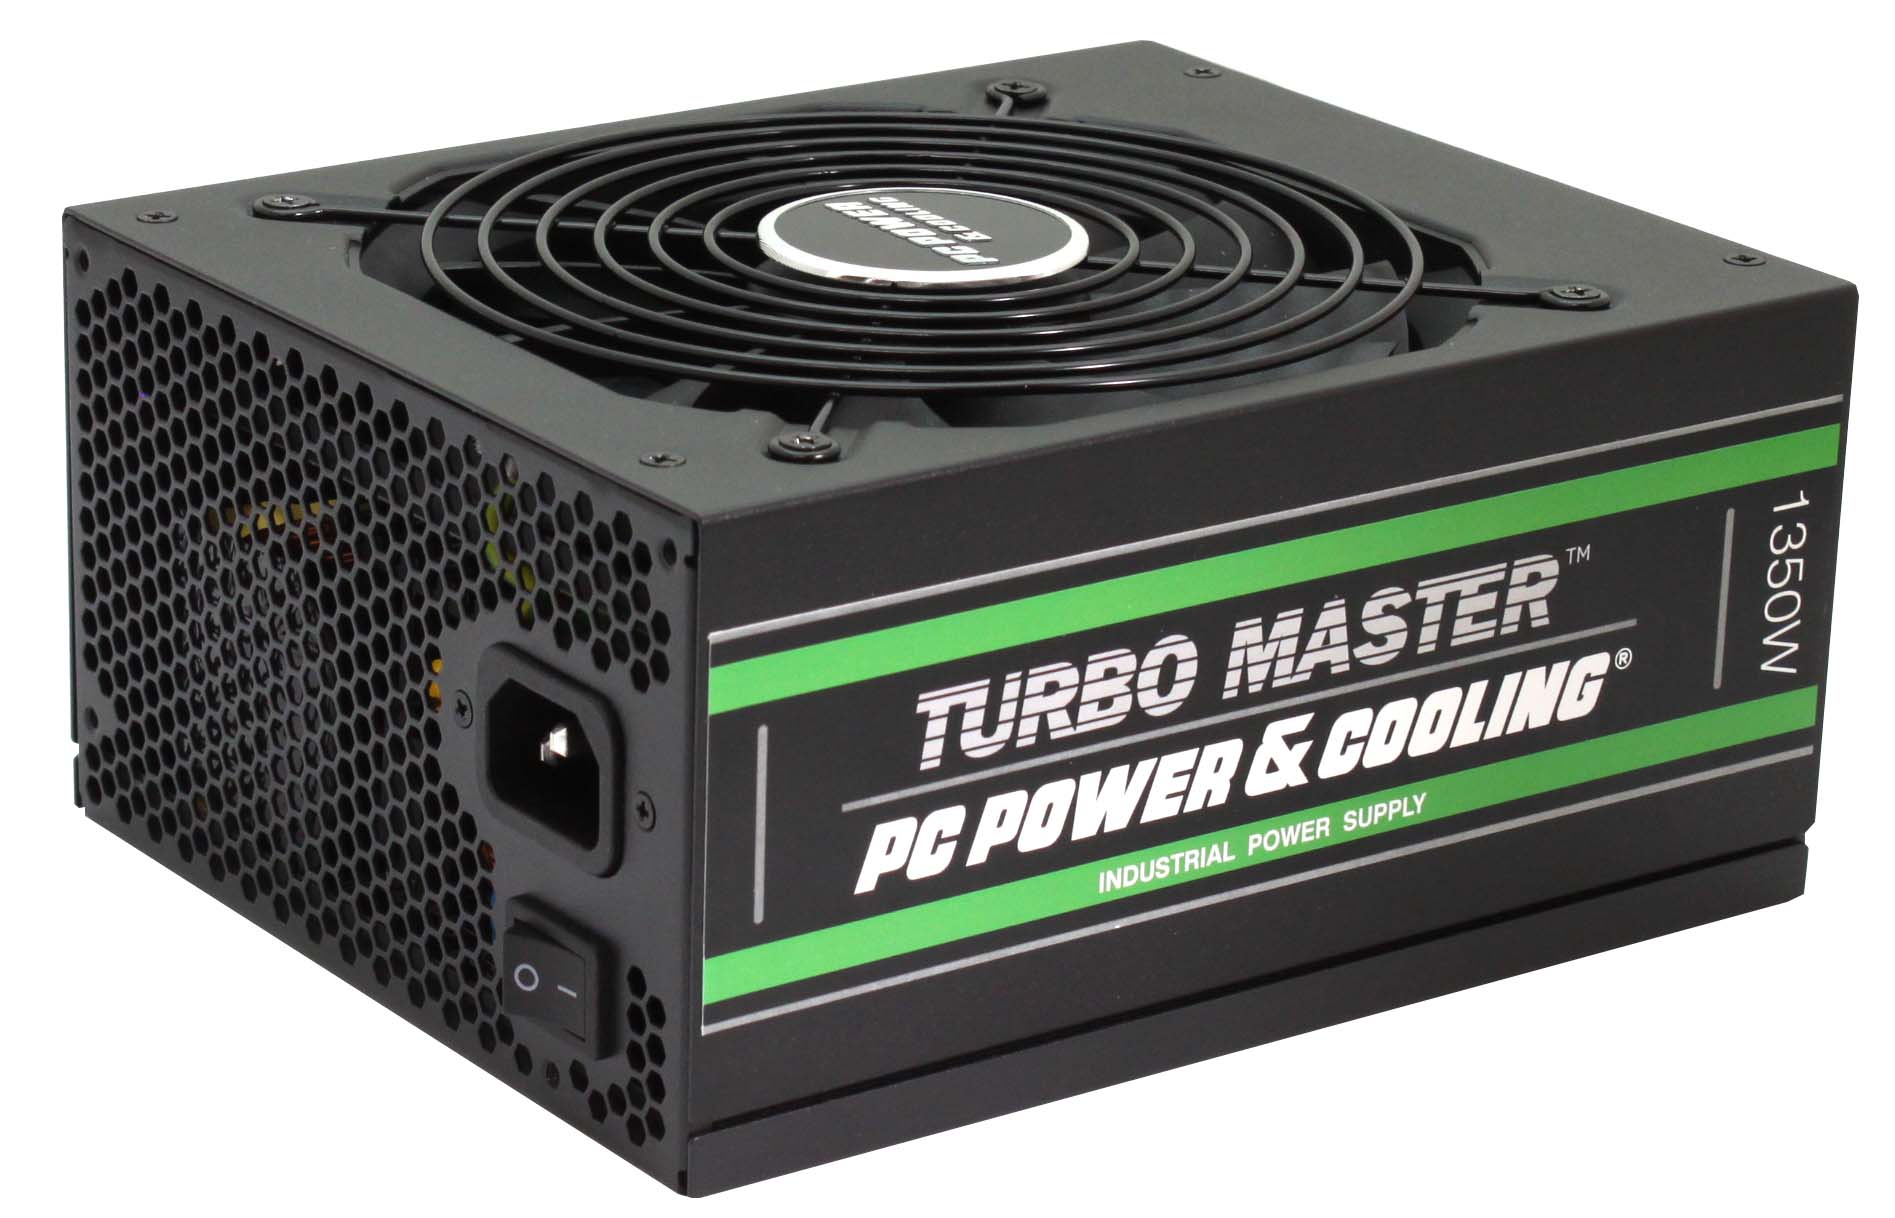 Блок питания 7.4. PC Power 750 Vision. Magister Turbo x. Блок питания High Power AGD-1350f 1350w. Turbo Master цена.